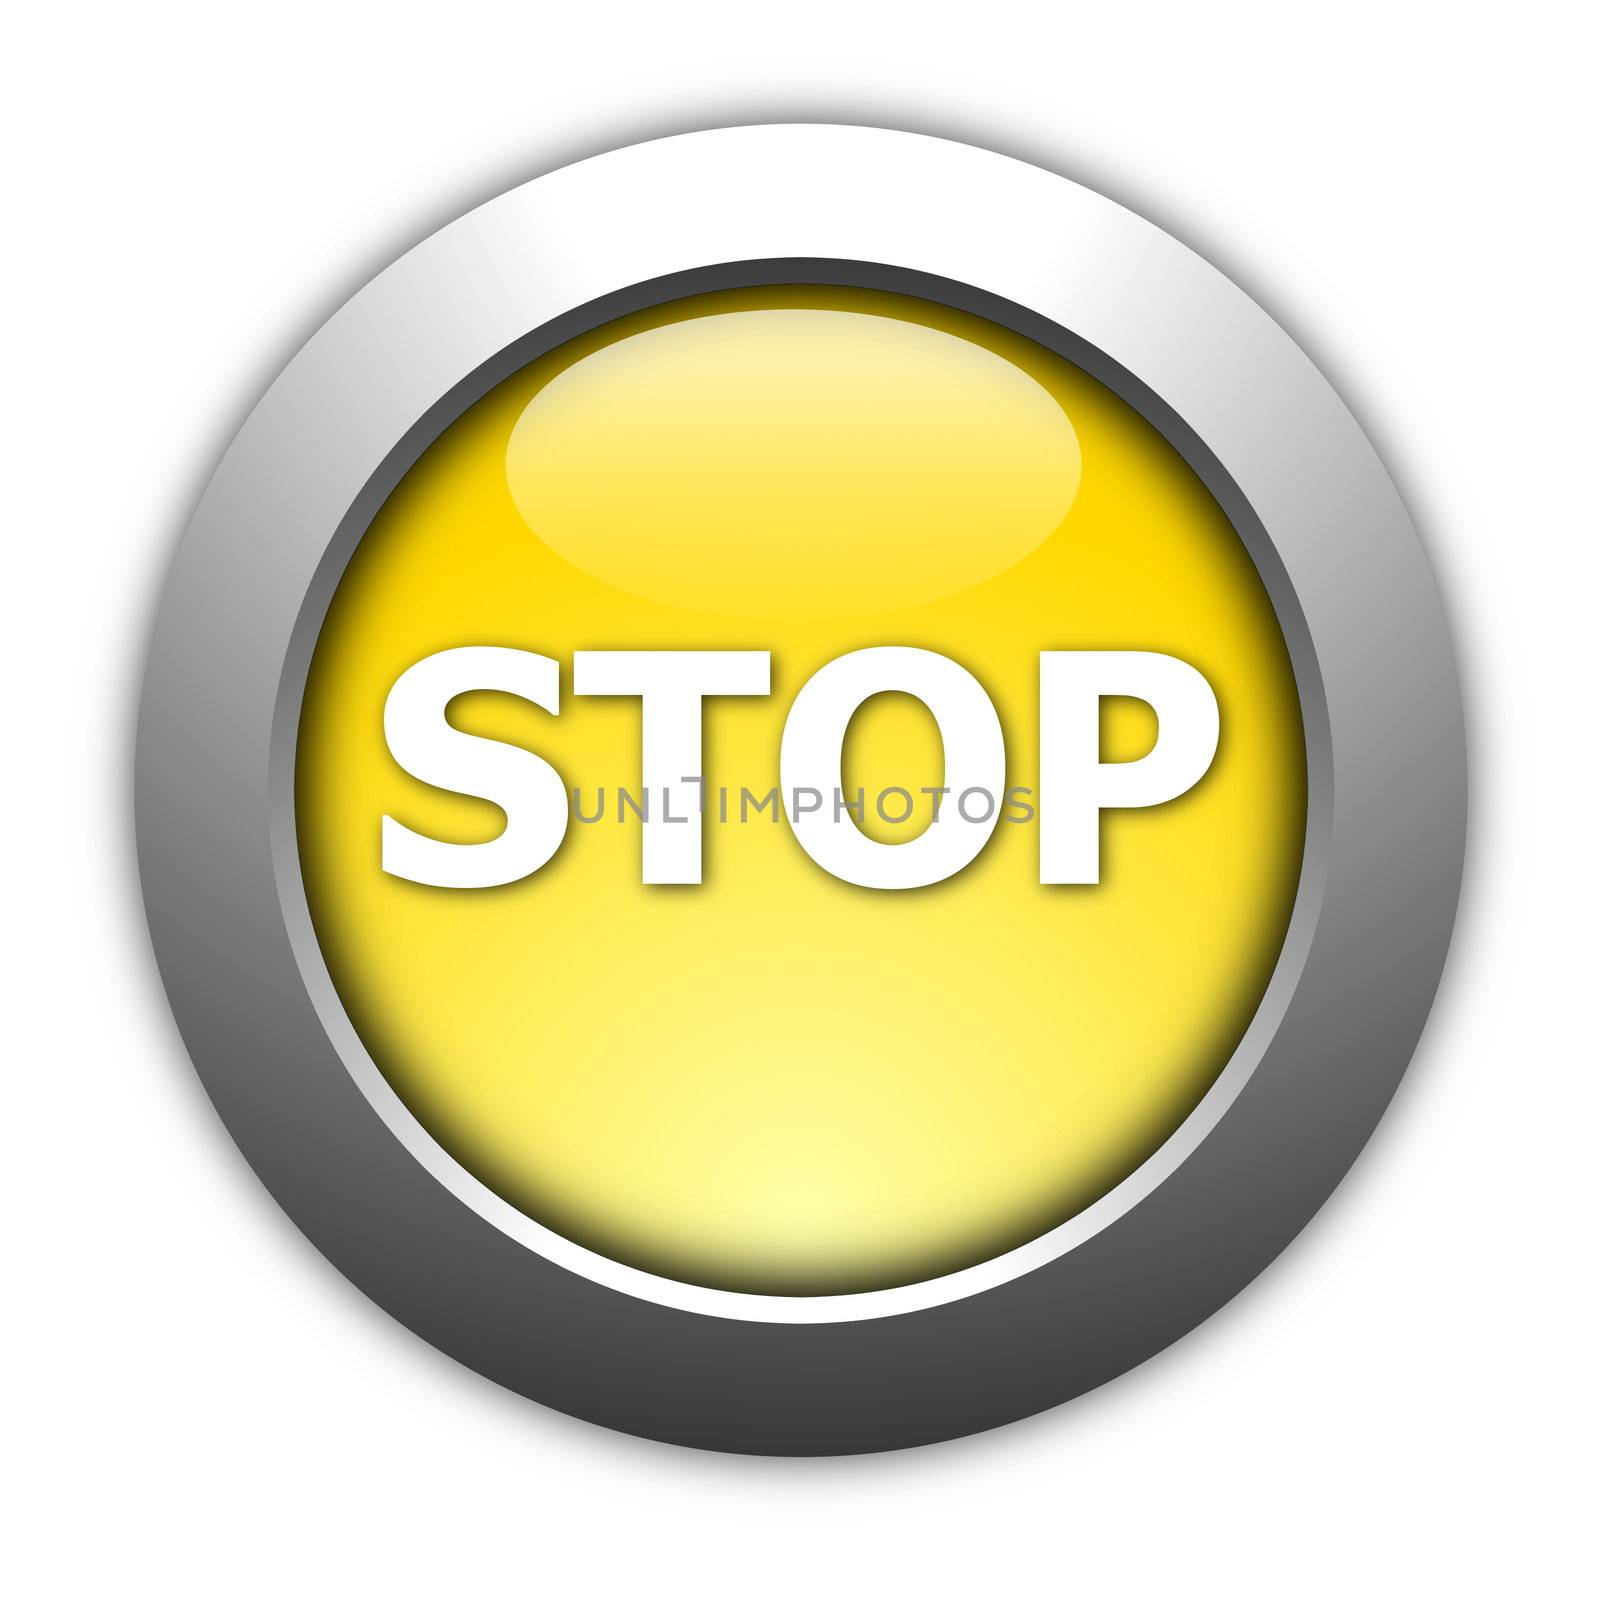 stop button by gunnar3000